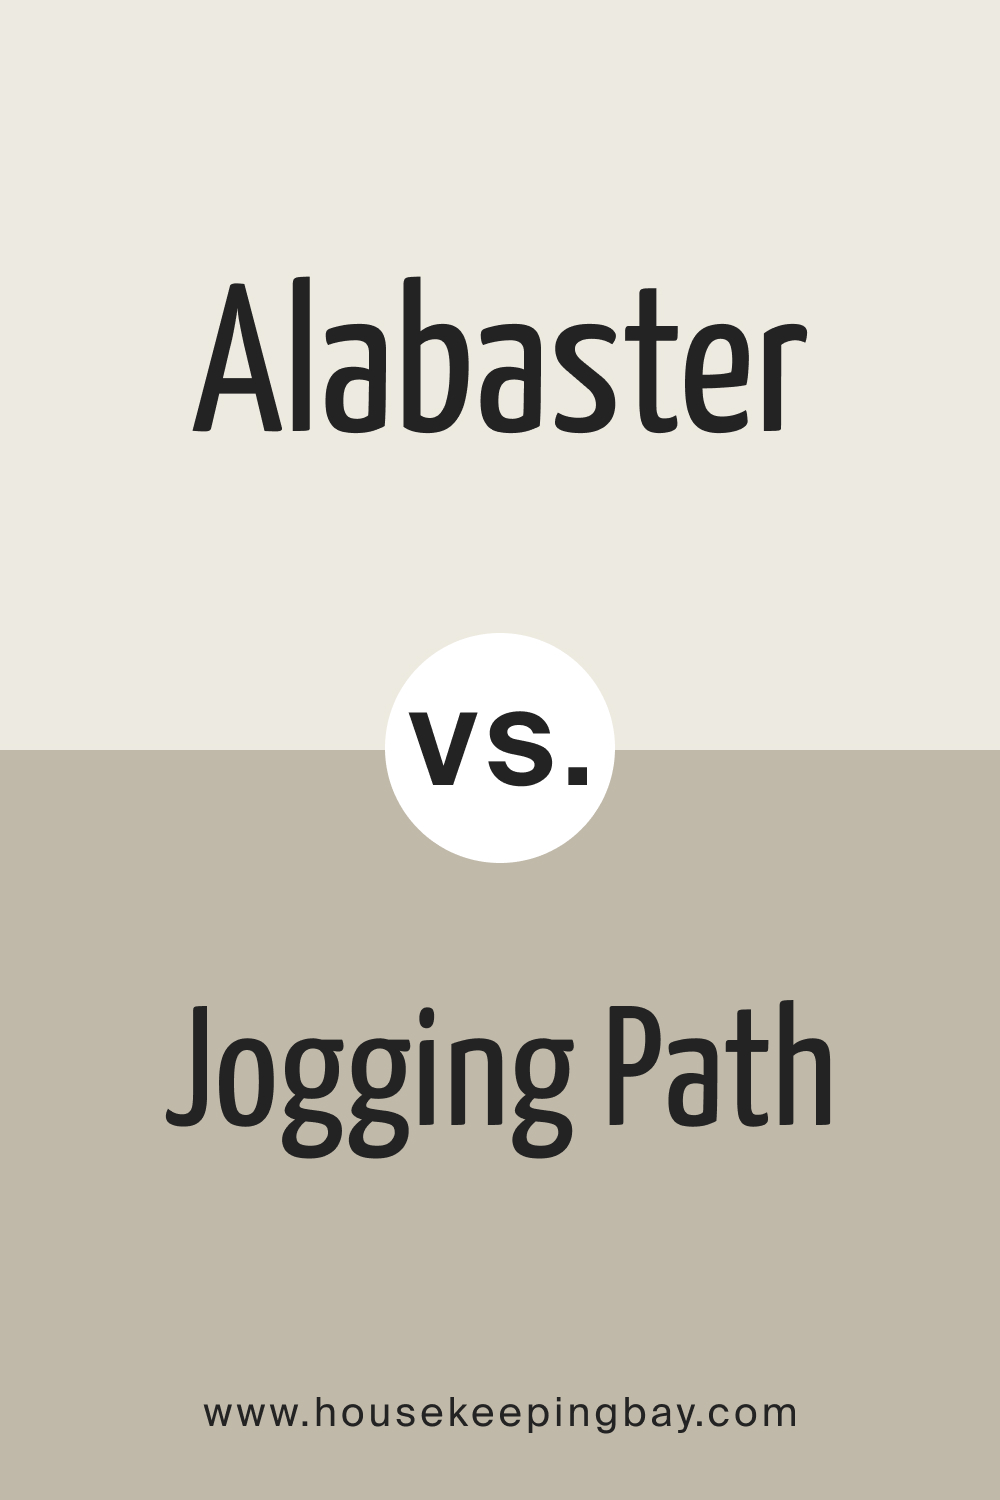 Alabaster vs. Jogging Path